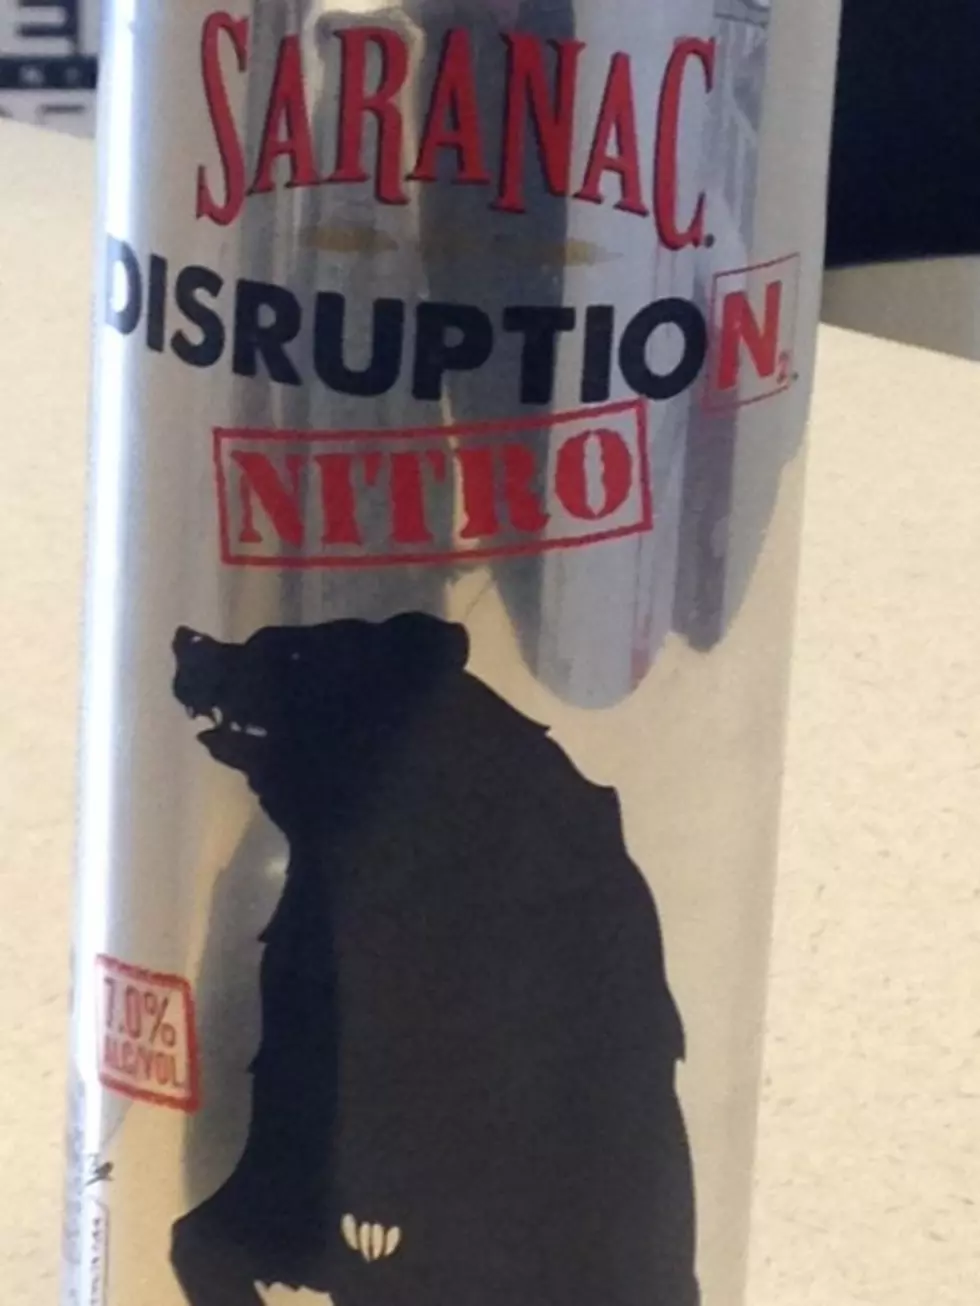 Saranac Debuts New Nitro Beer: Disruption